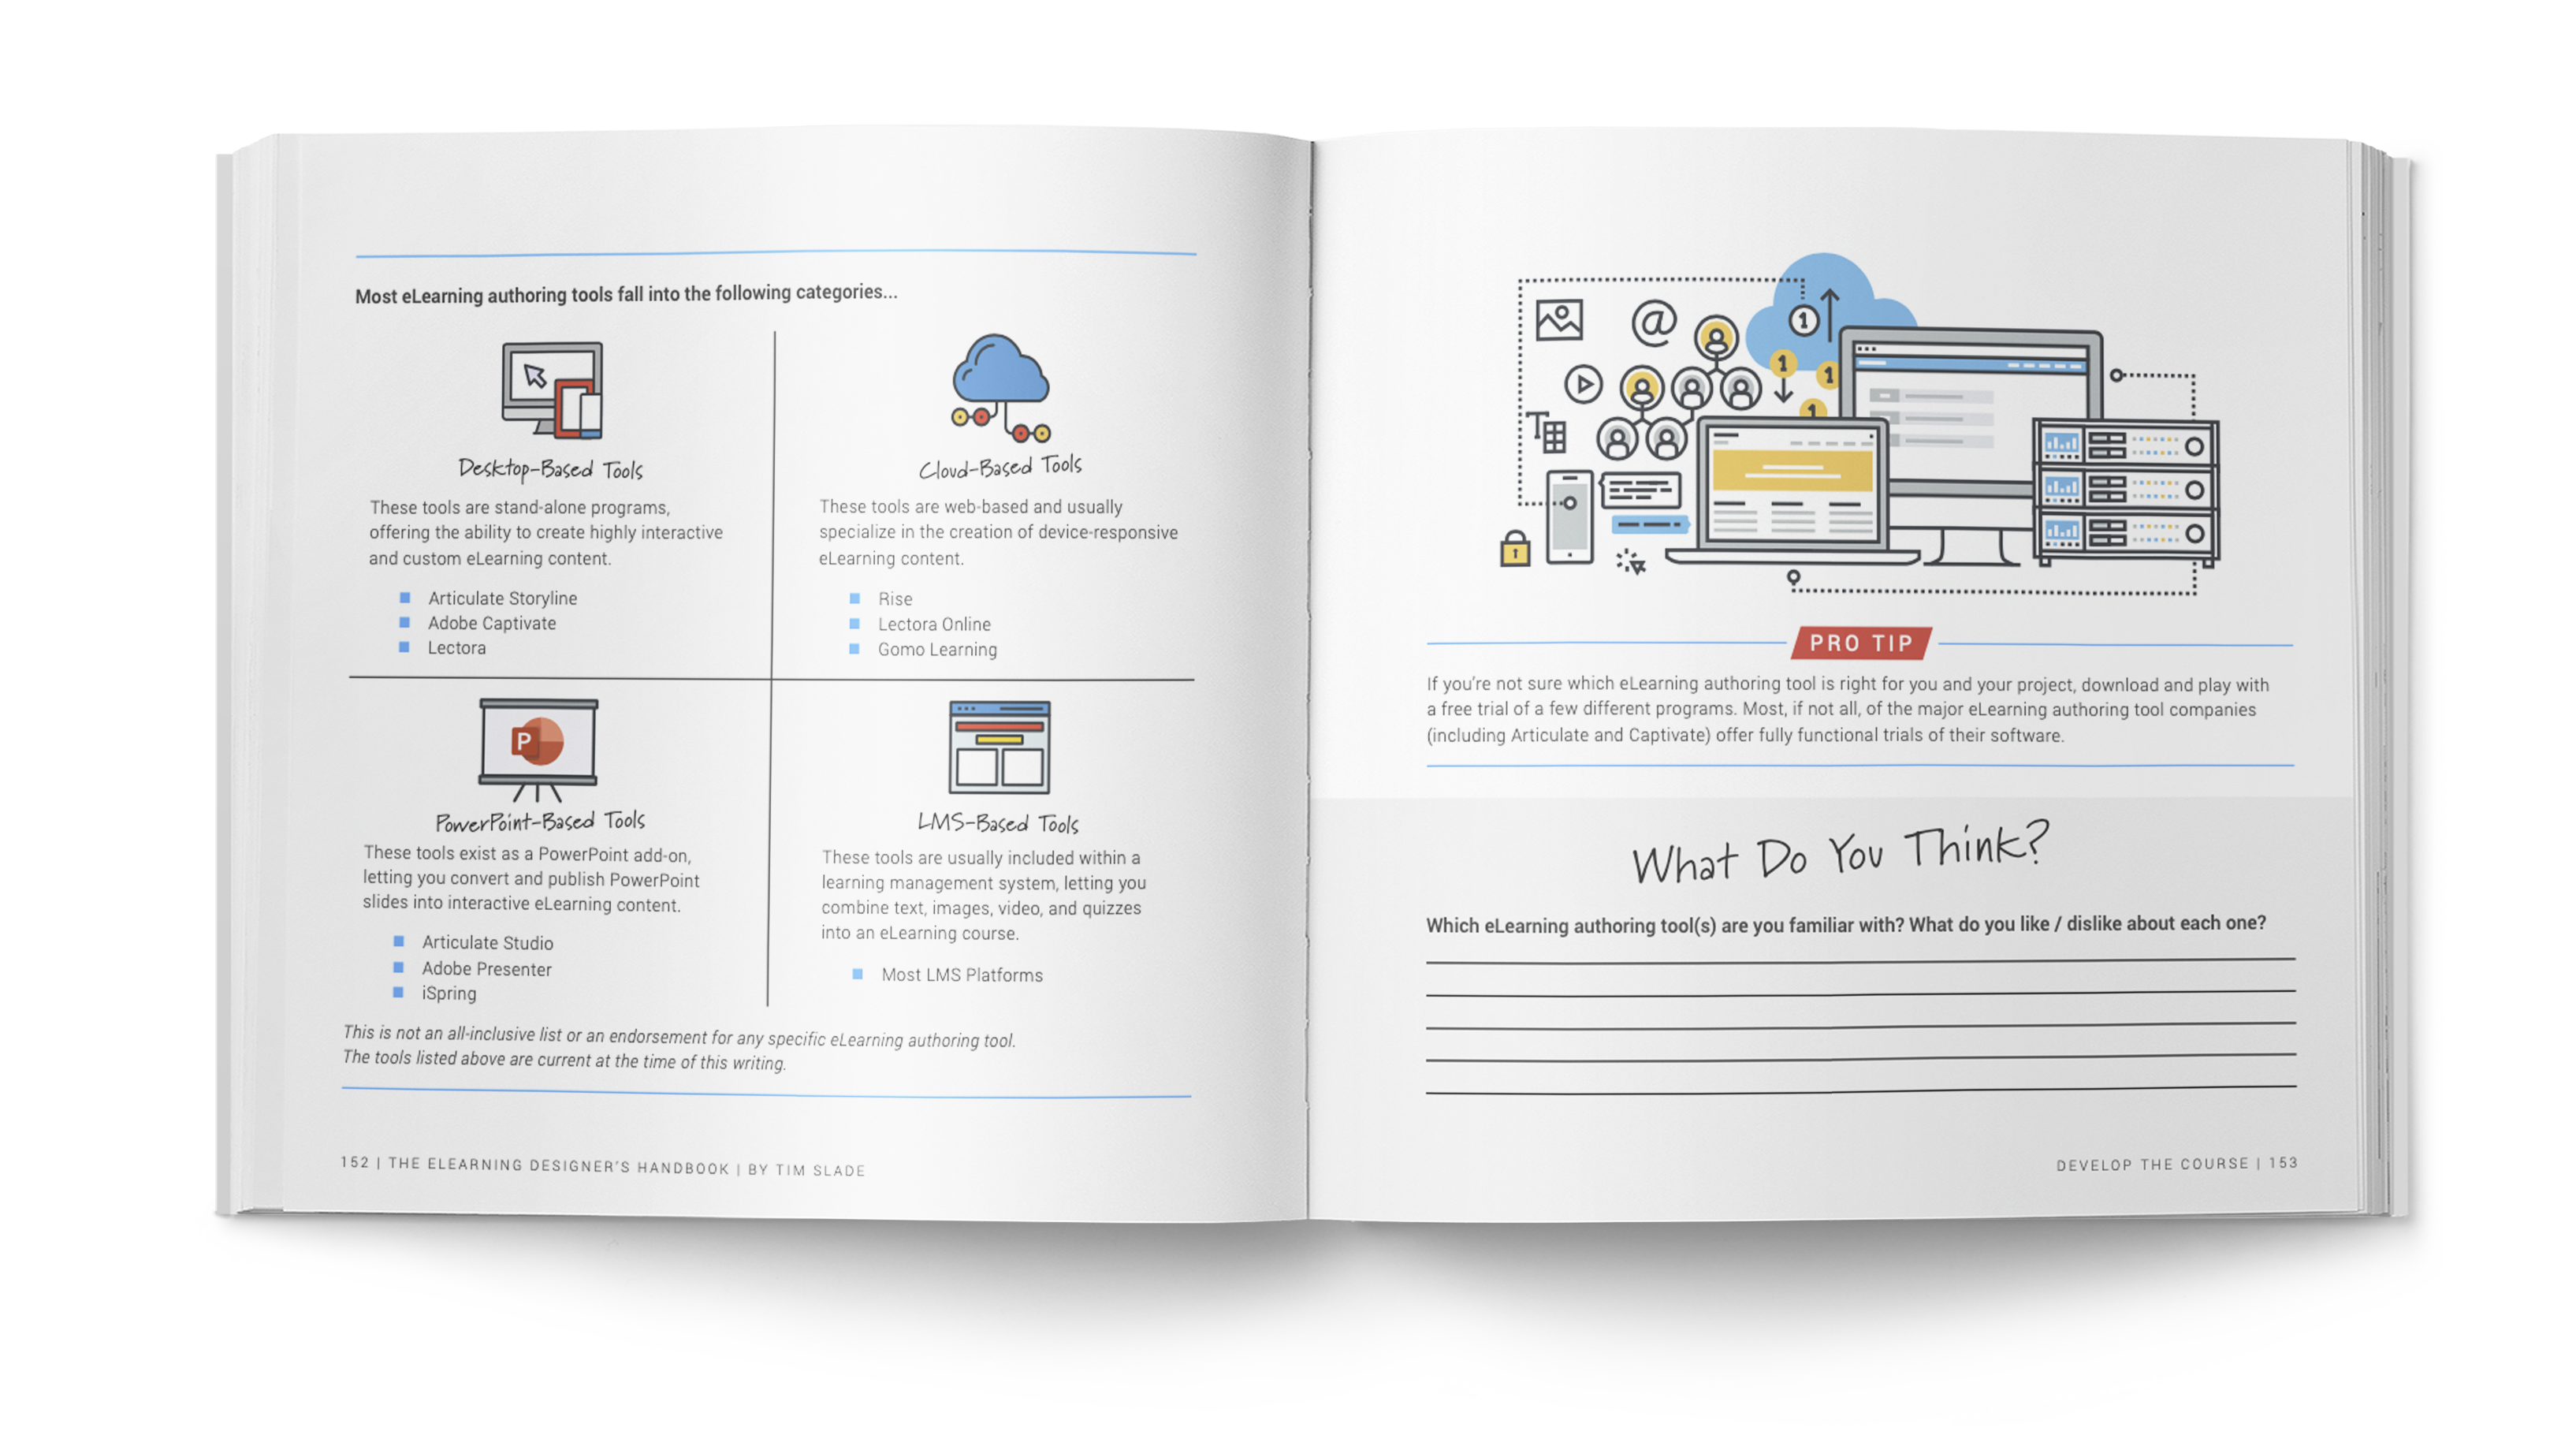 The eLearning Designer's Handbook by Tim Slade | Develop the Course | Freelance eLearning Designer | The eLearning Designer's Academy